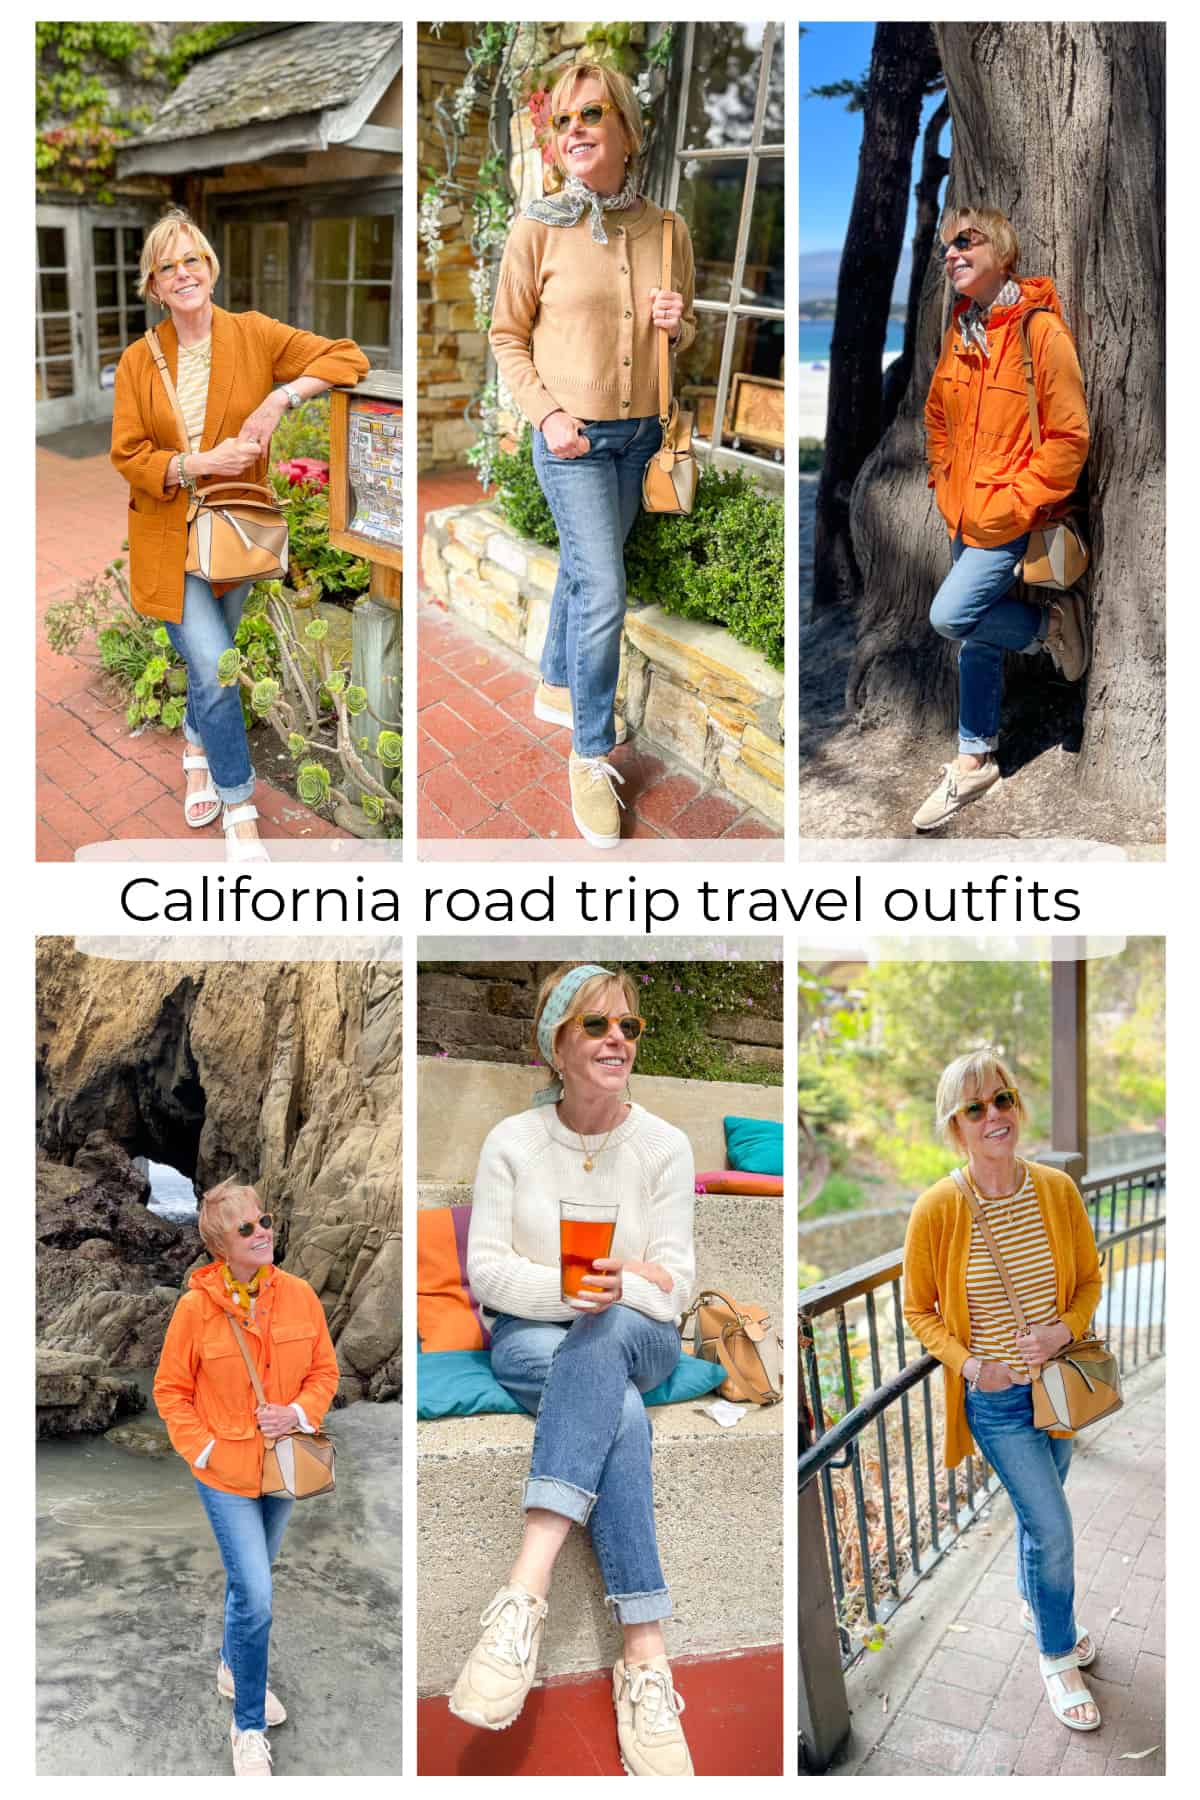 https://unefemme.net/wp-content/uploads/2021/08/California-road-trip-travel-outfits.jpeg